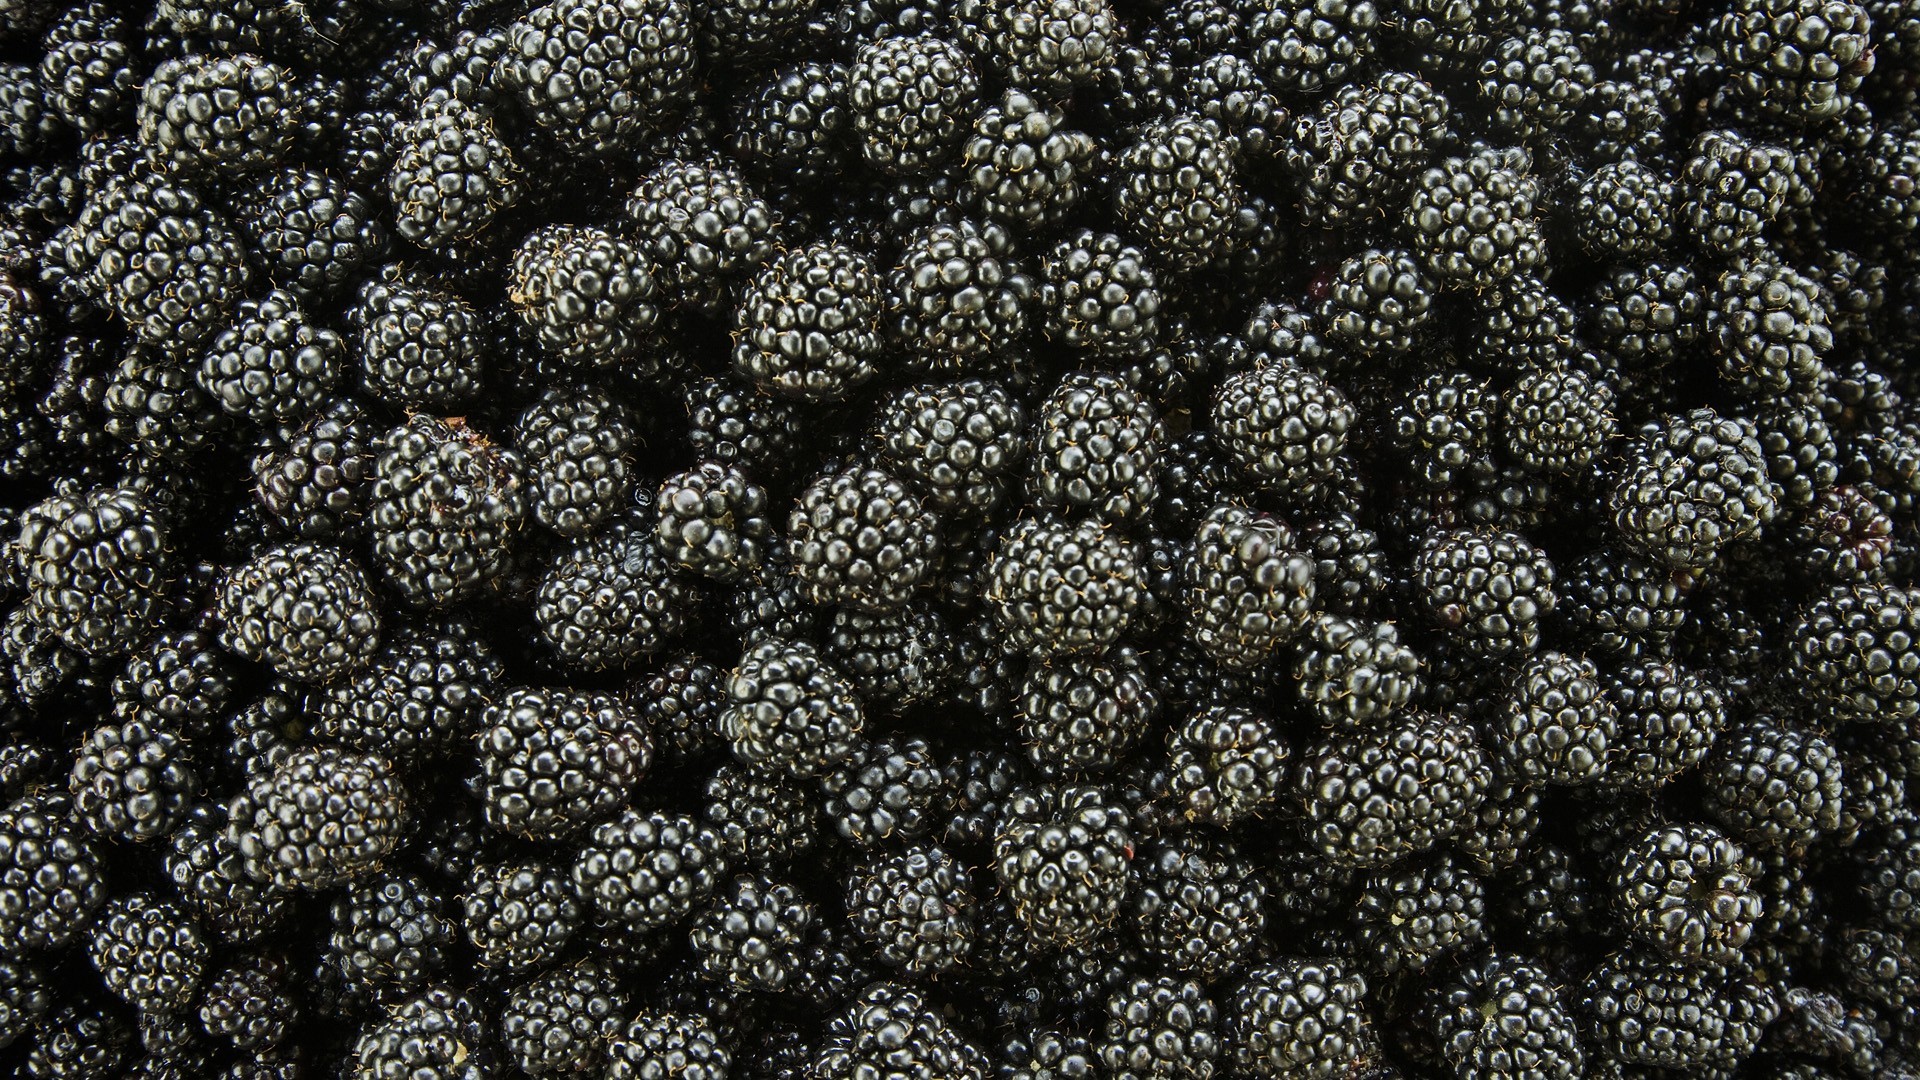 General 1920x1080 food plants fruit blackberries macro texture